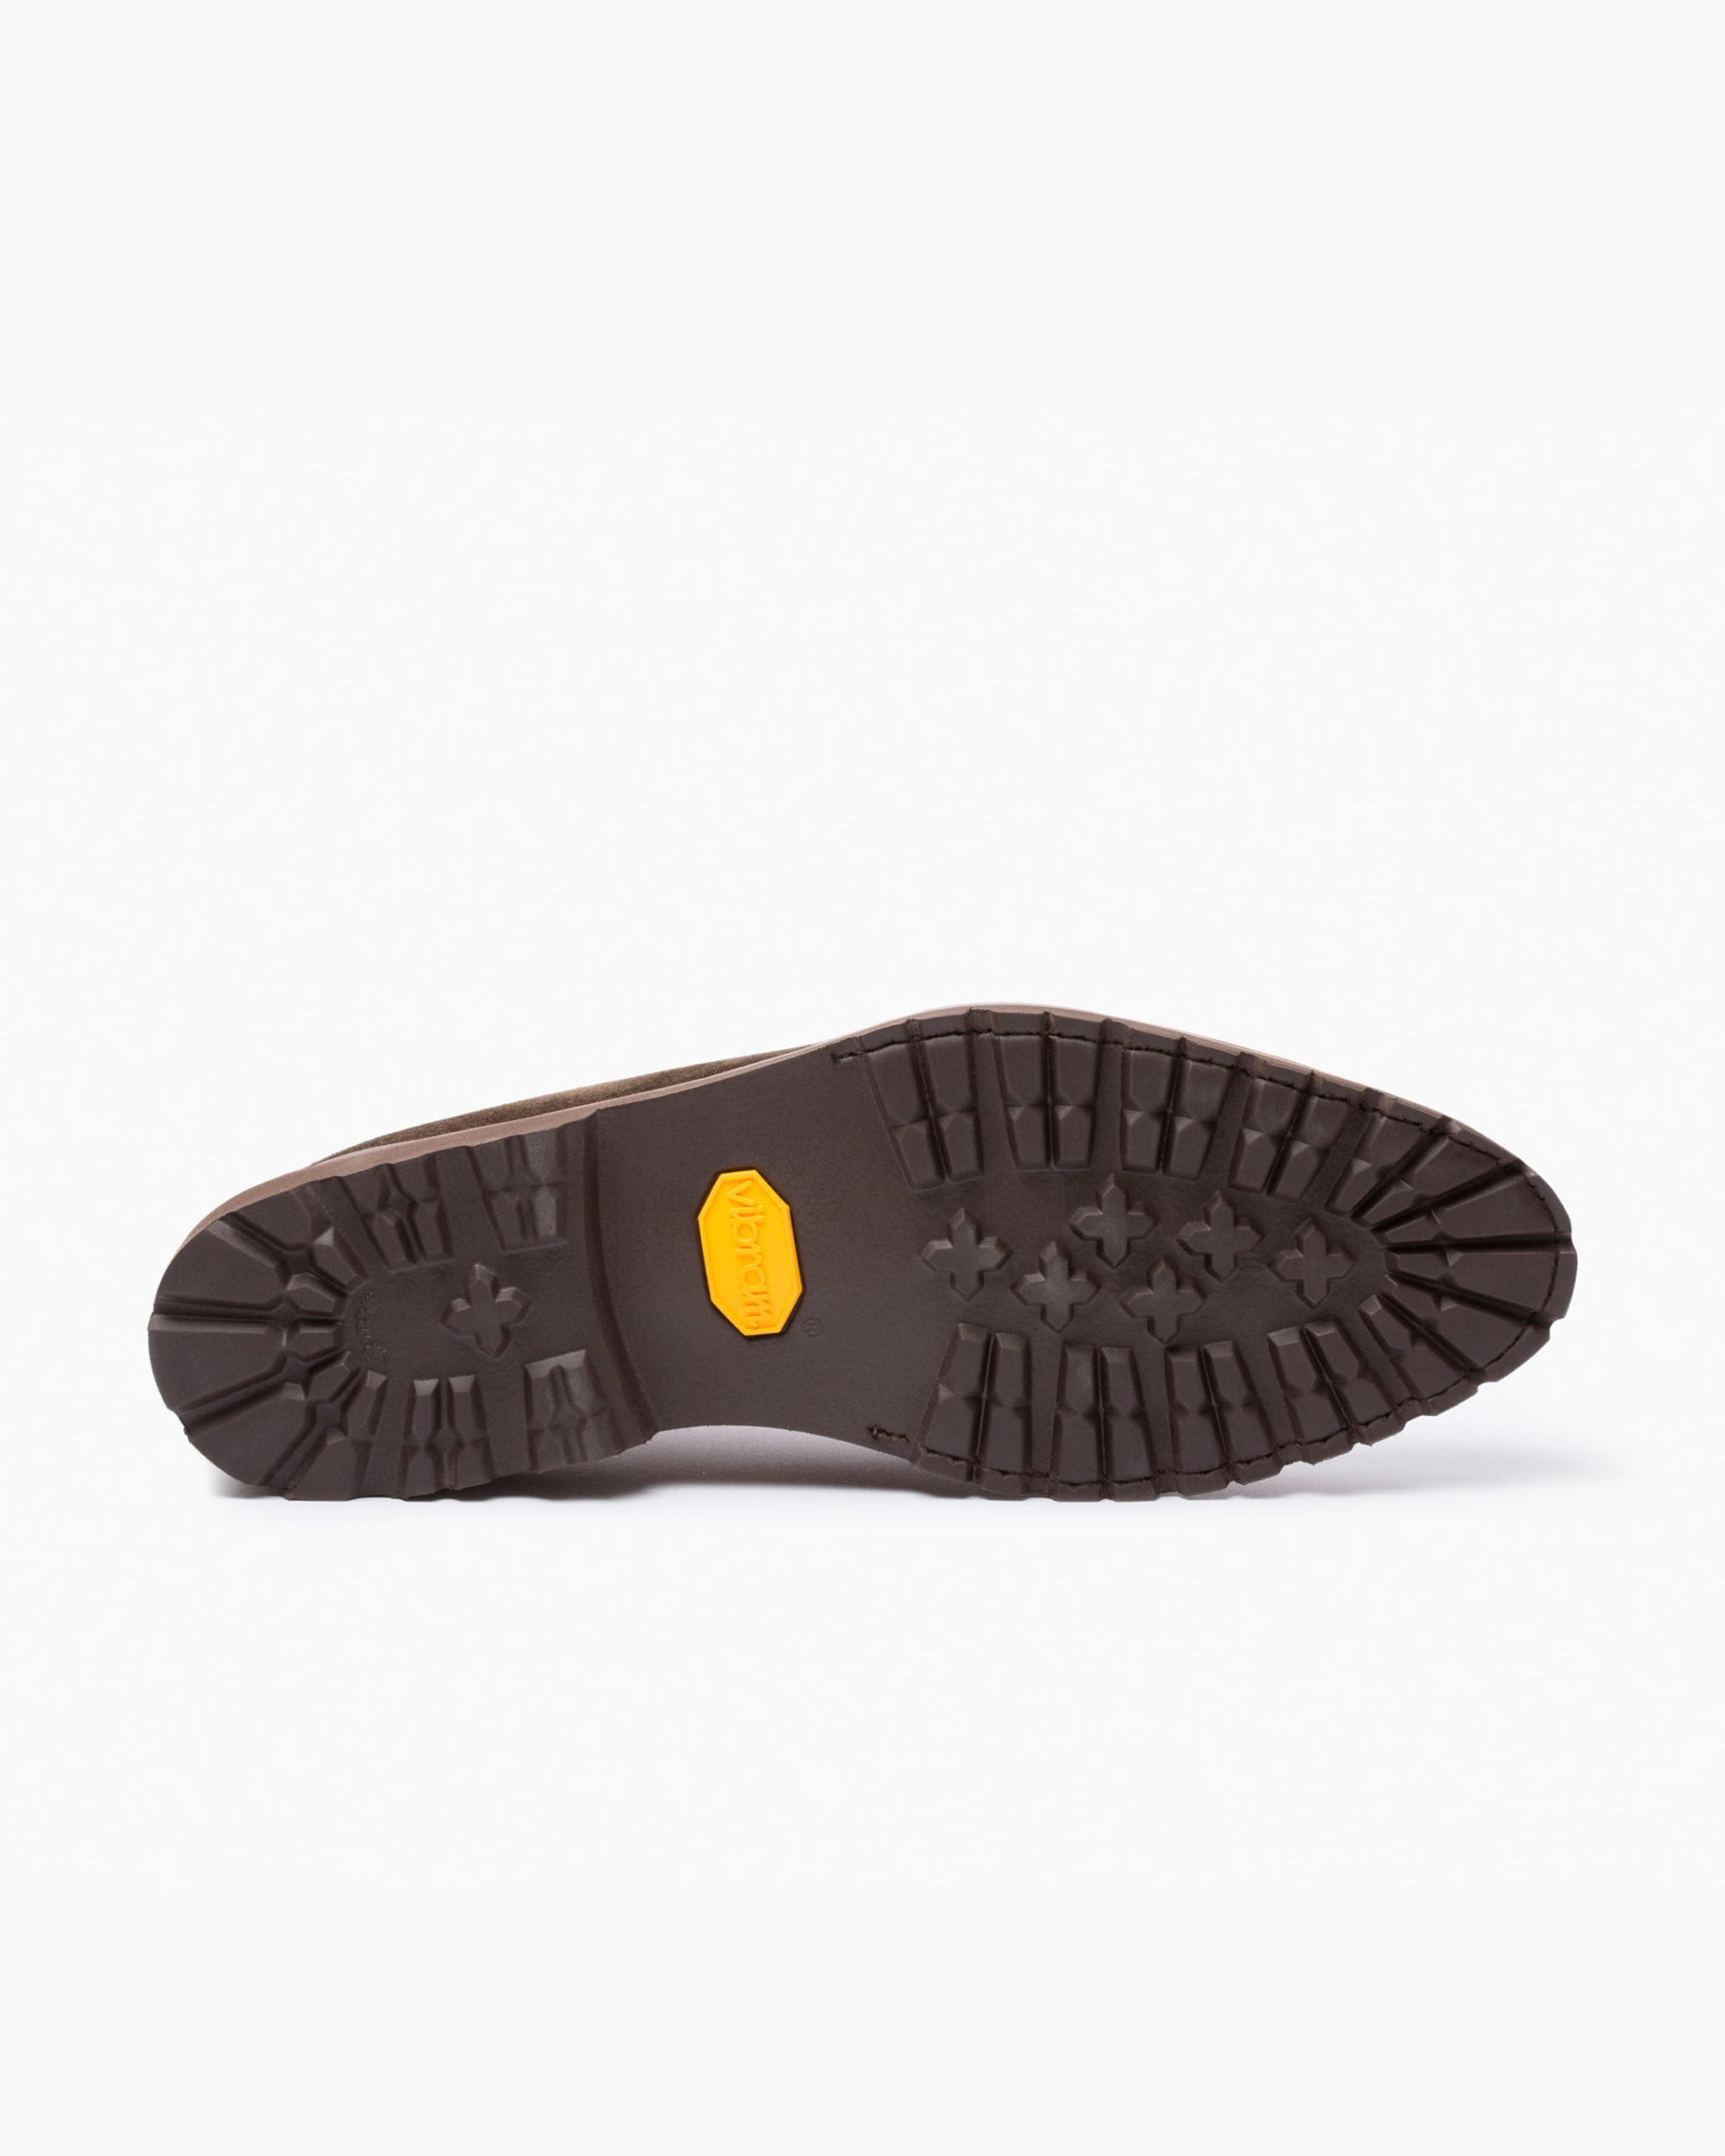 Desert Welt - Bontoni: Handcrafted Italian Men's Shoes